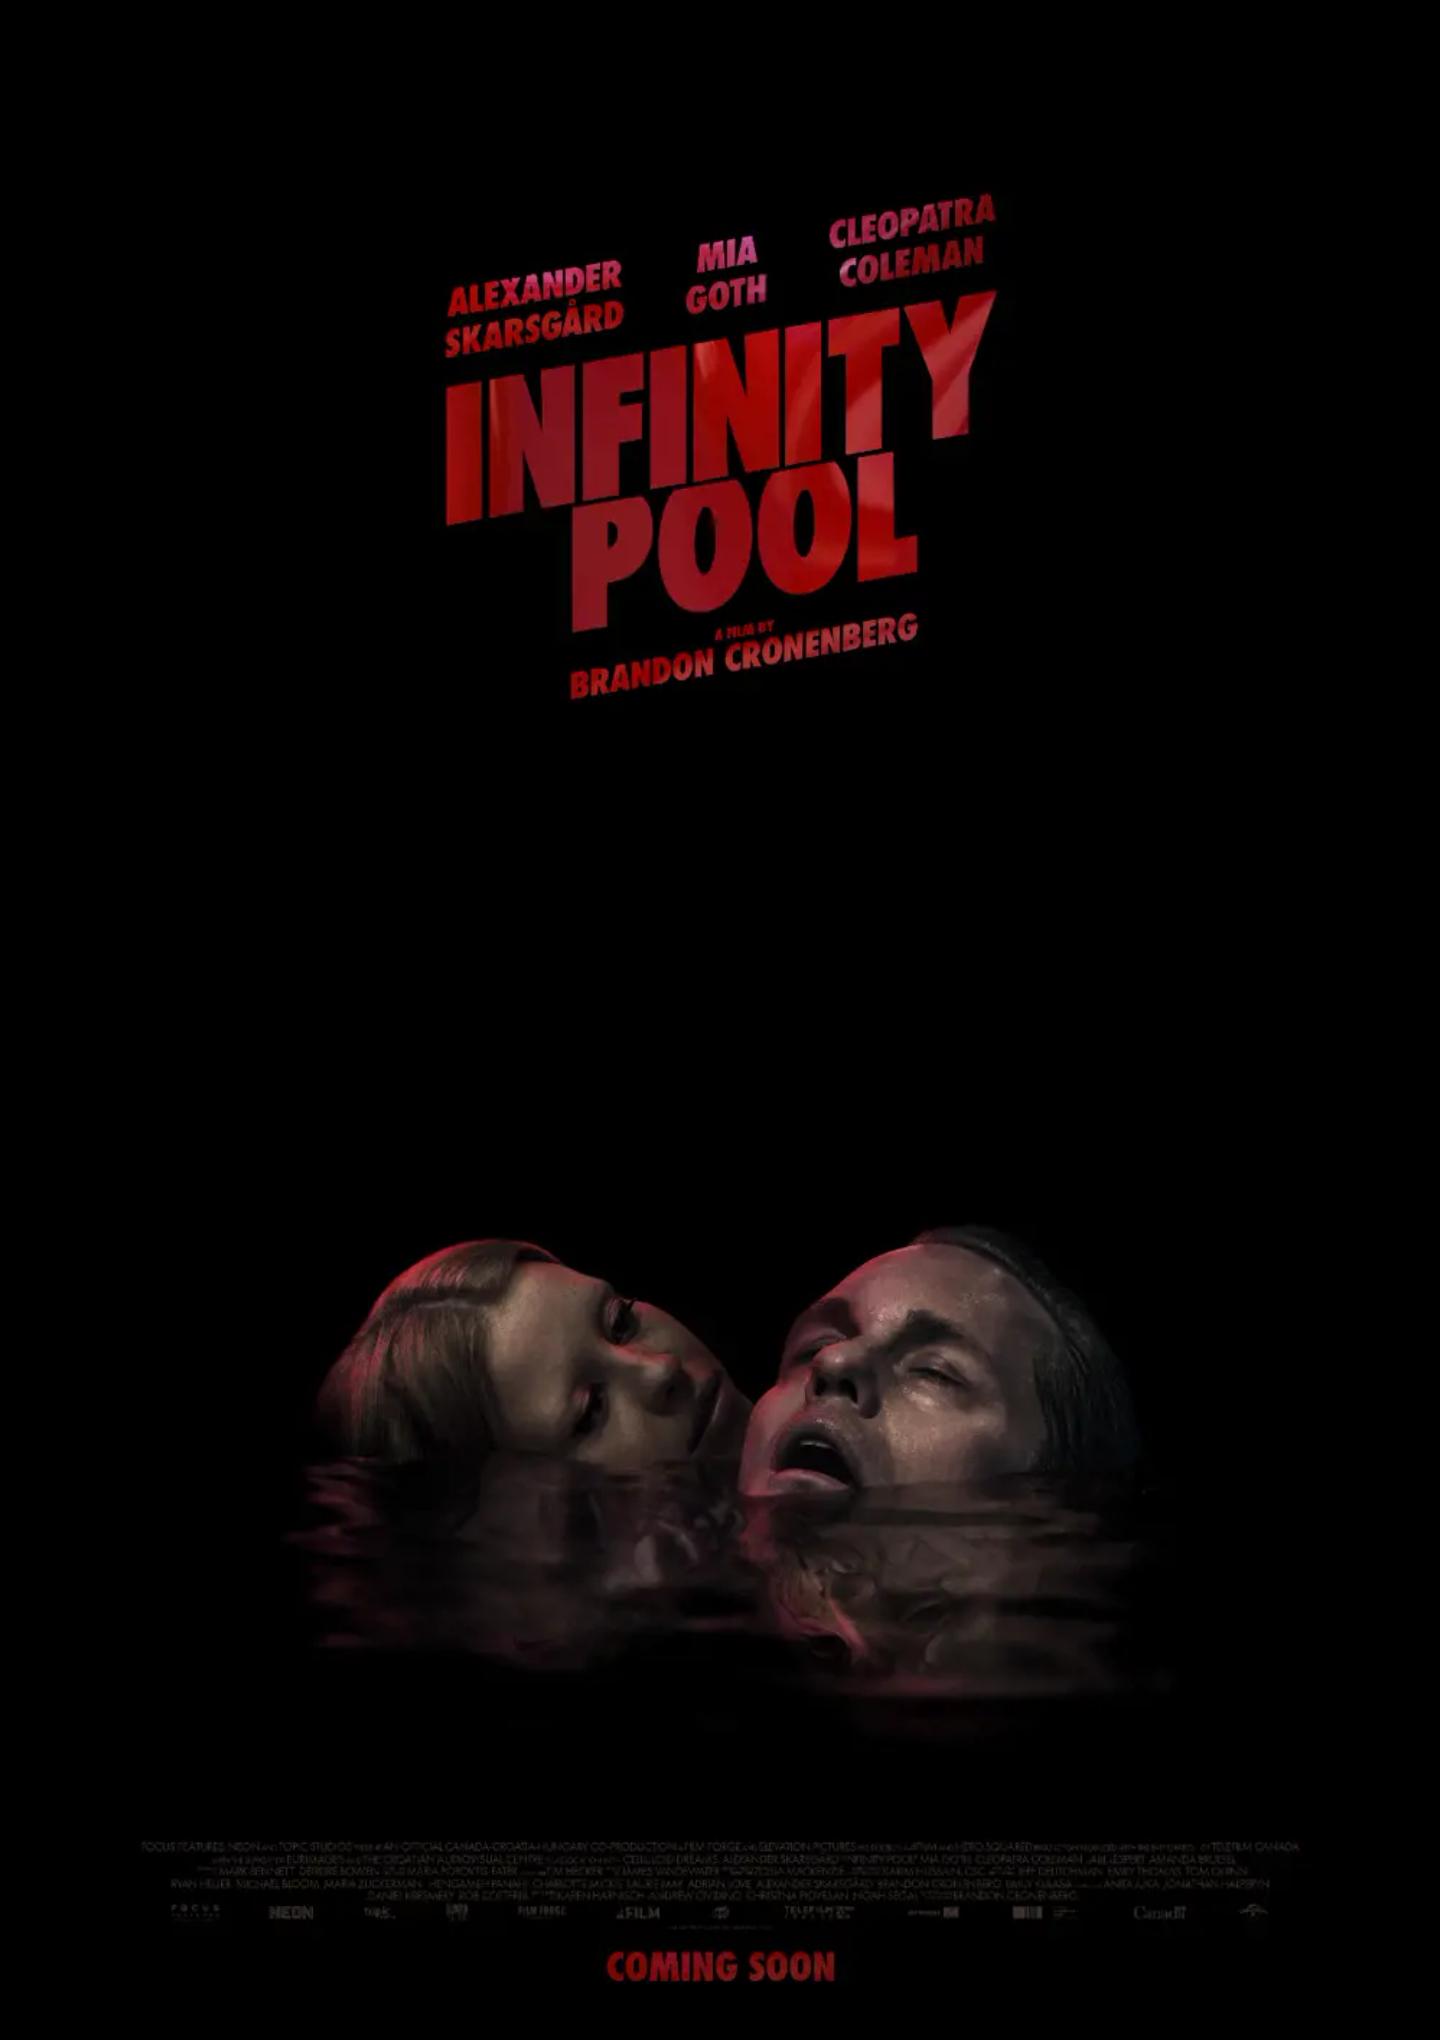 Plakat for 'Infinity Pool'